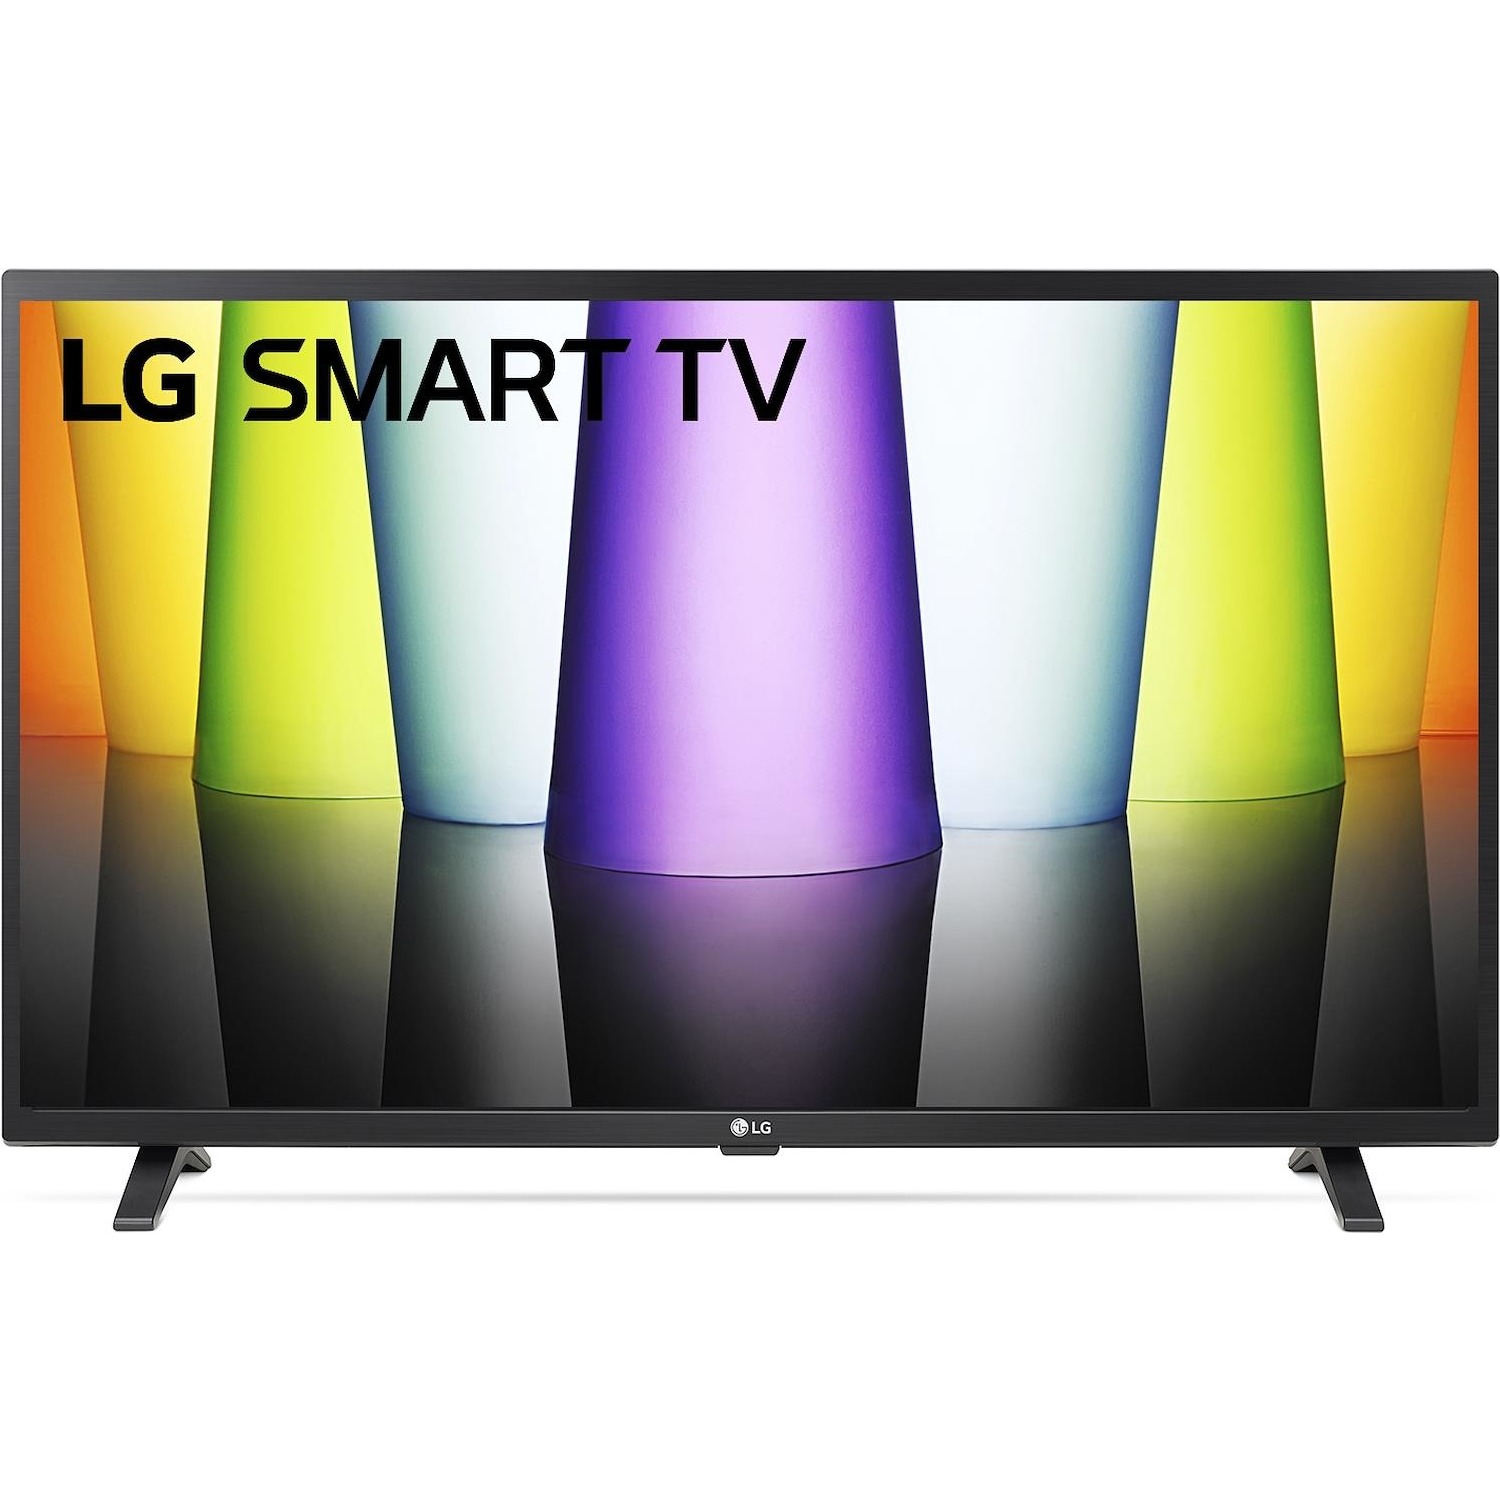 Immagine per TV LED Smart LG 32LQ63006 da DIMOStore